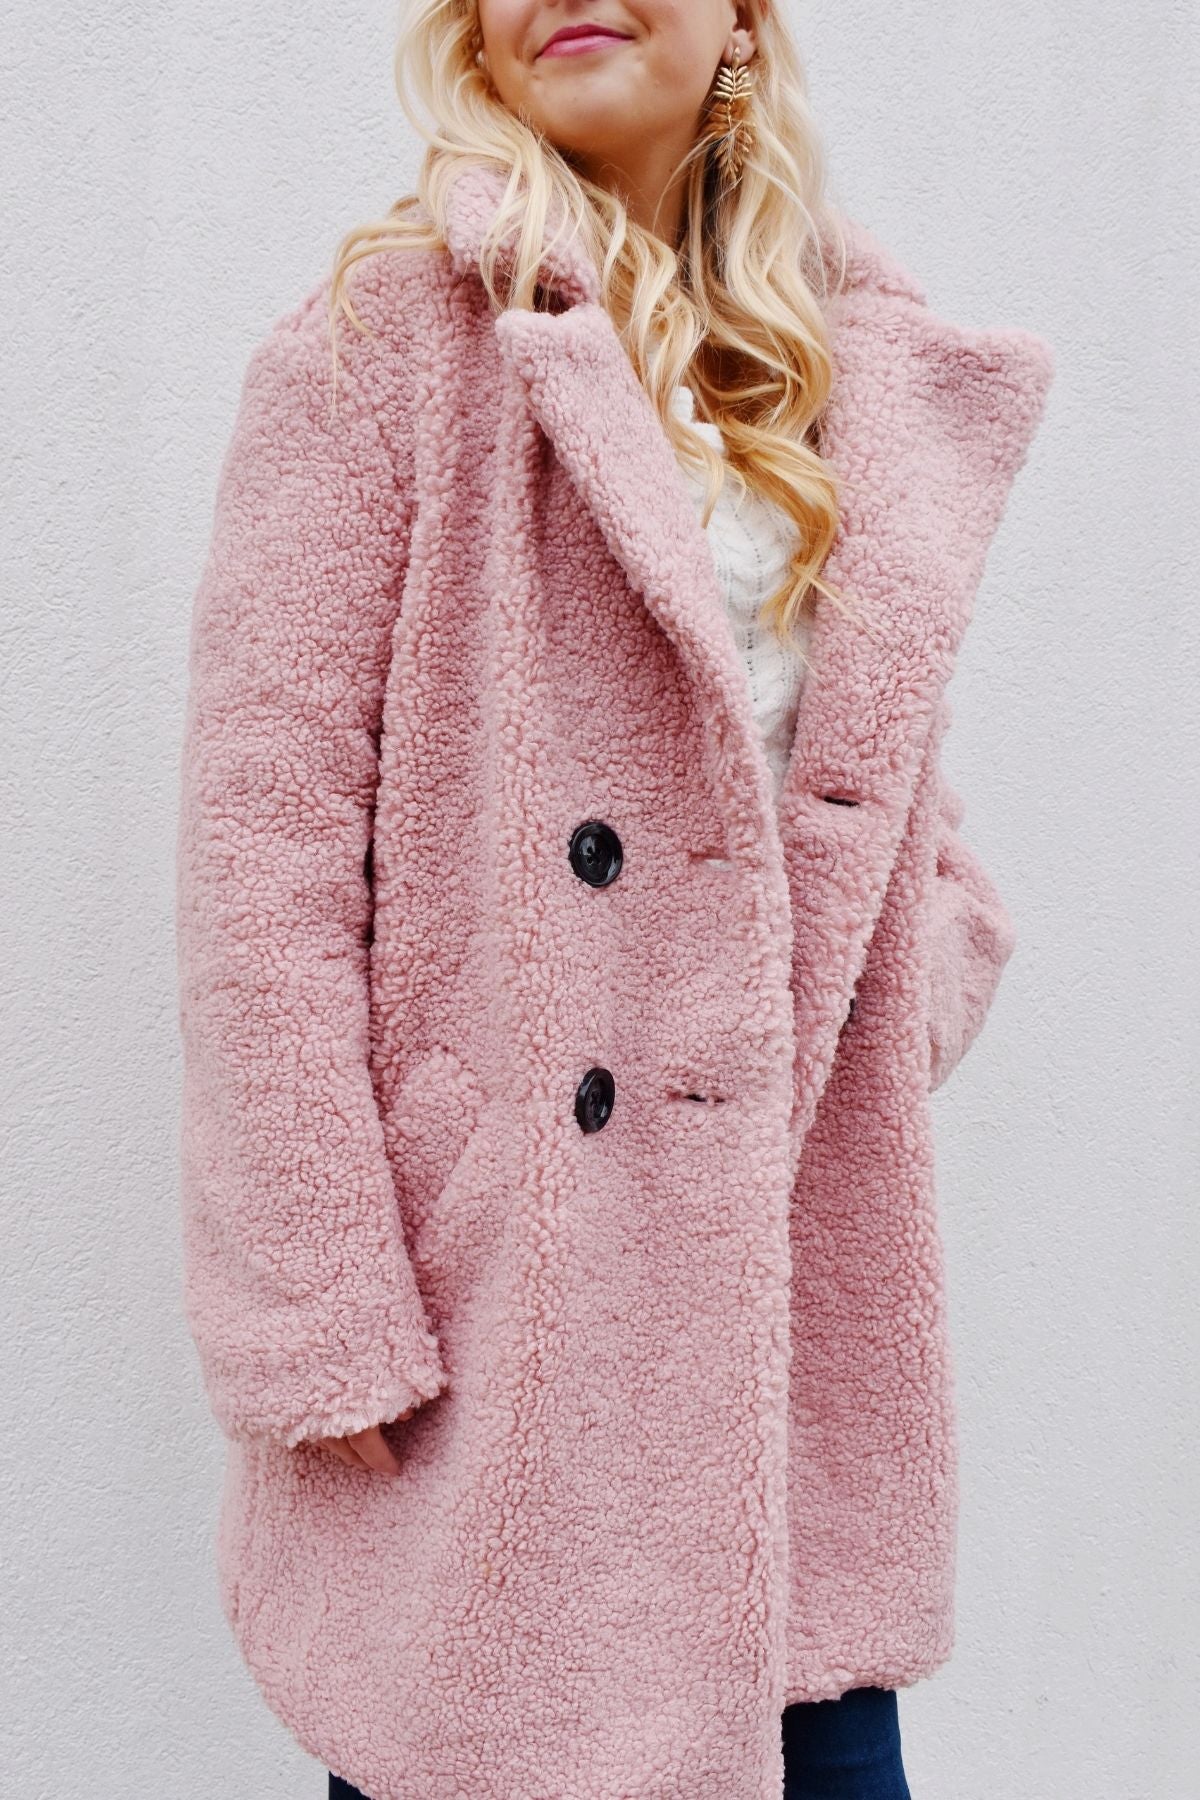 Blush Teddy Coat